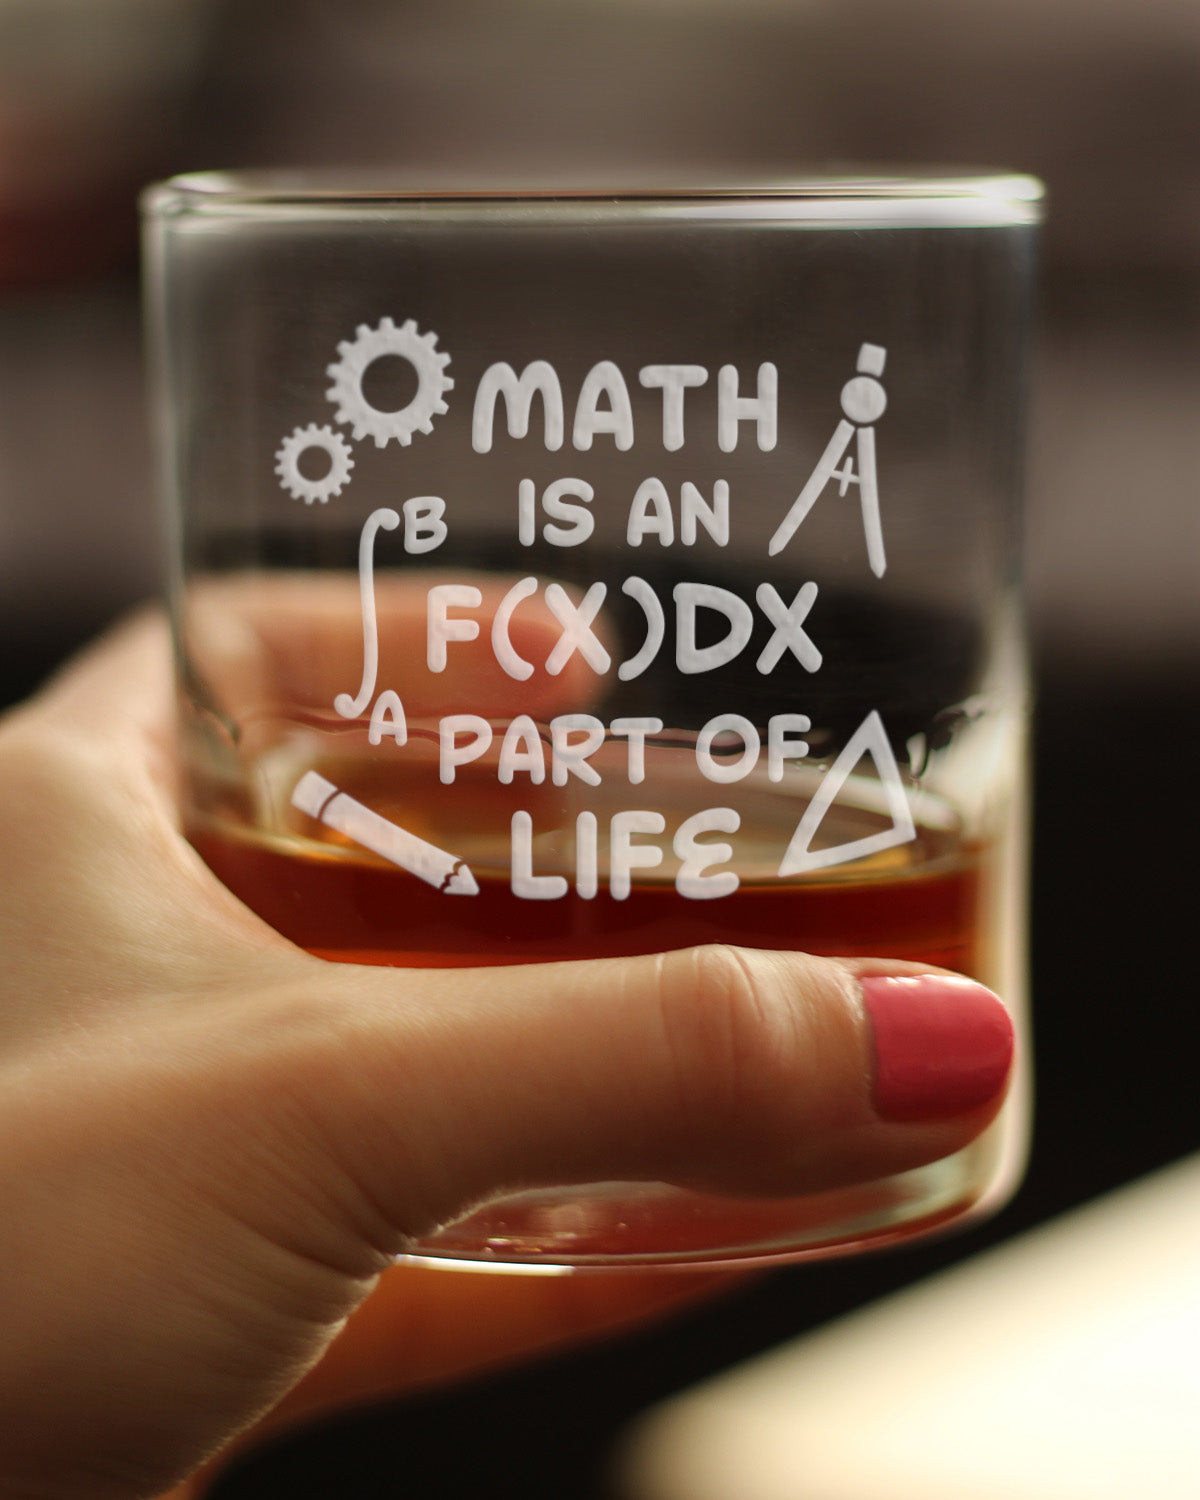 Math is an Integral Part of Life – Whiskey Rocks Glass - Funny Math Nerd or Teacher Gifts for Women &amp; Men - 10.25 Oz